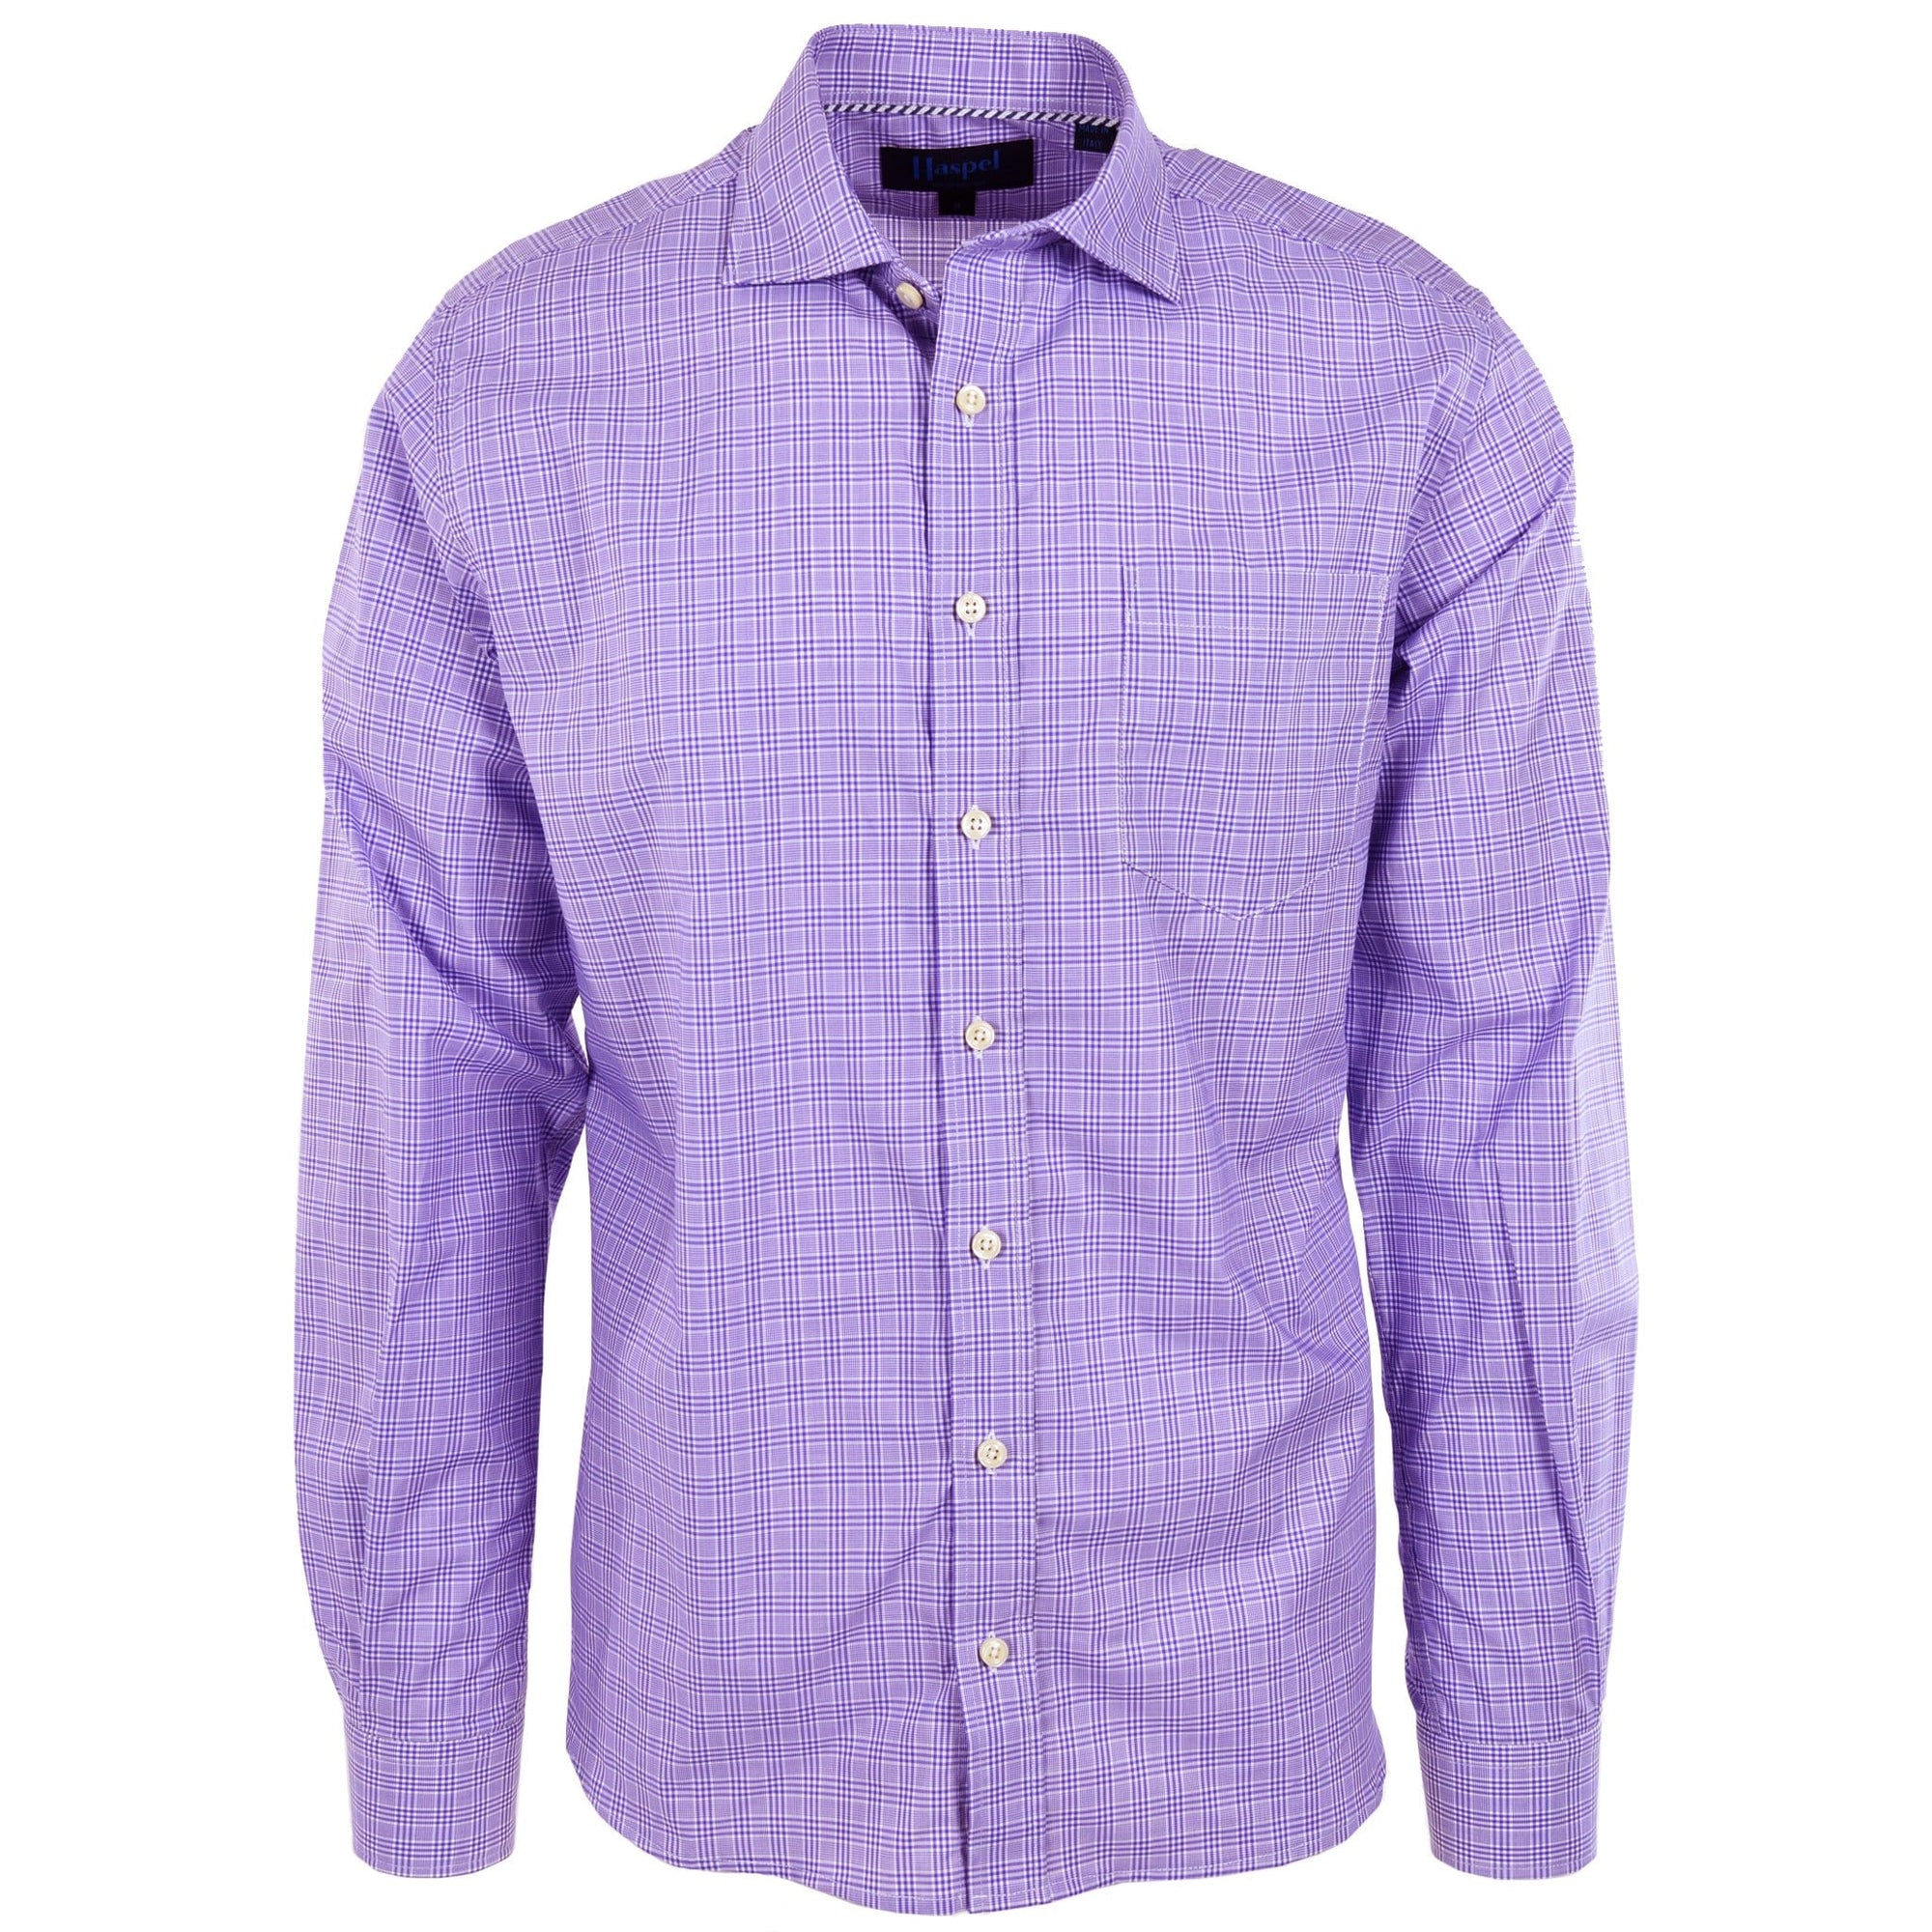 Audubon Purple & White Glenplaid - Haspel Clothing